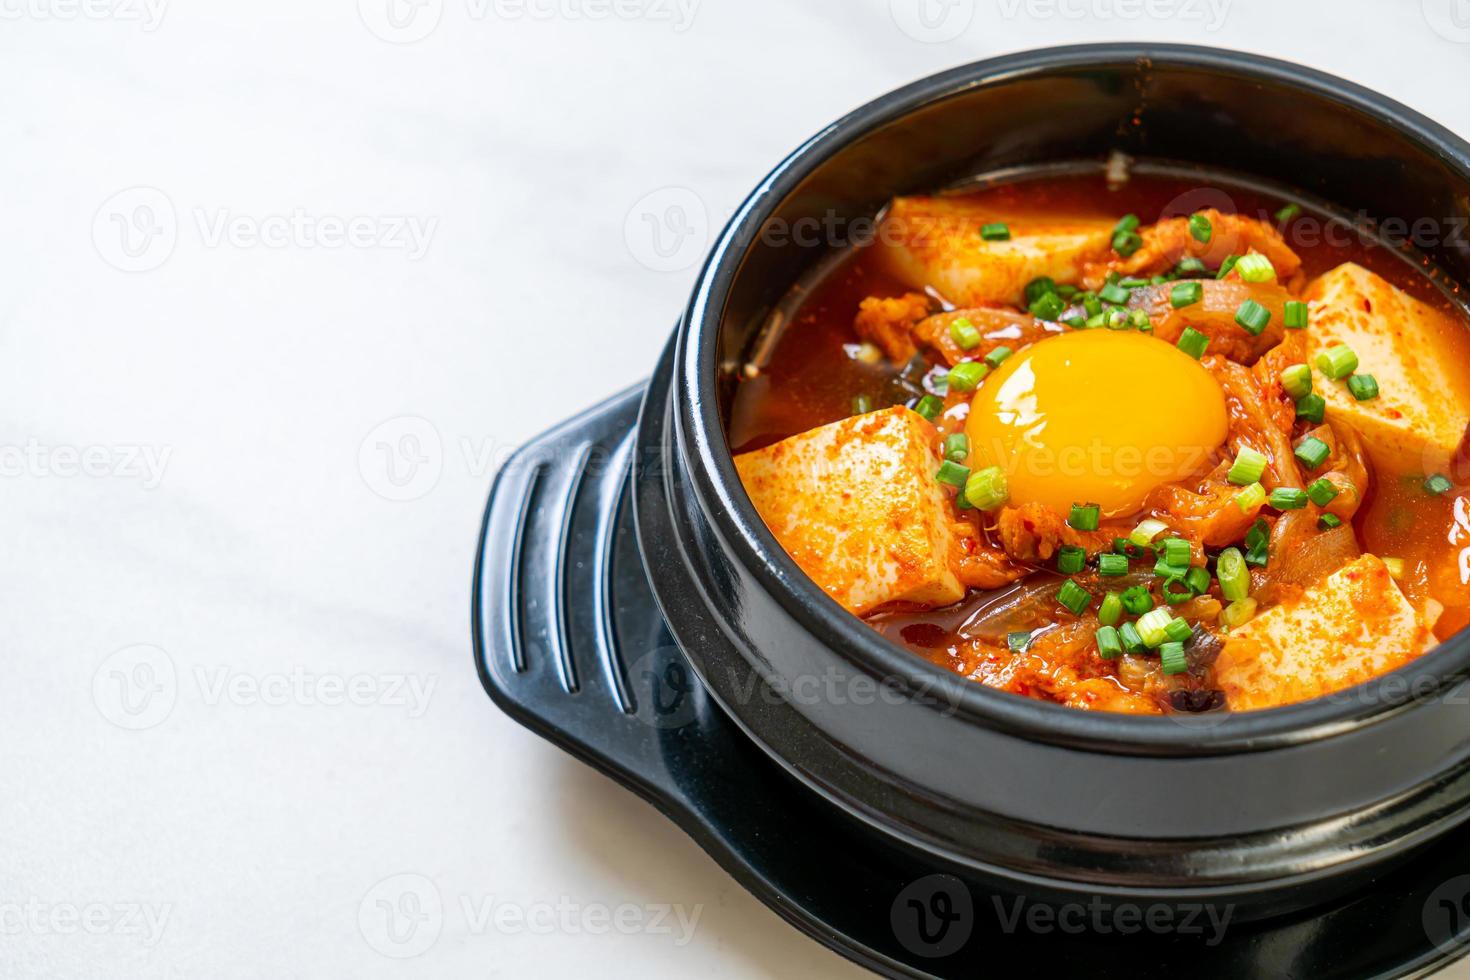 Kimchi Soup with Tofu and Egg or Korean Kimchi Stew photo